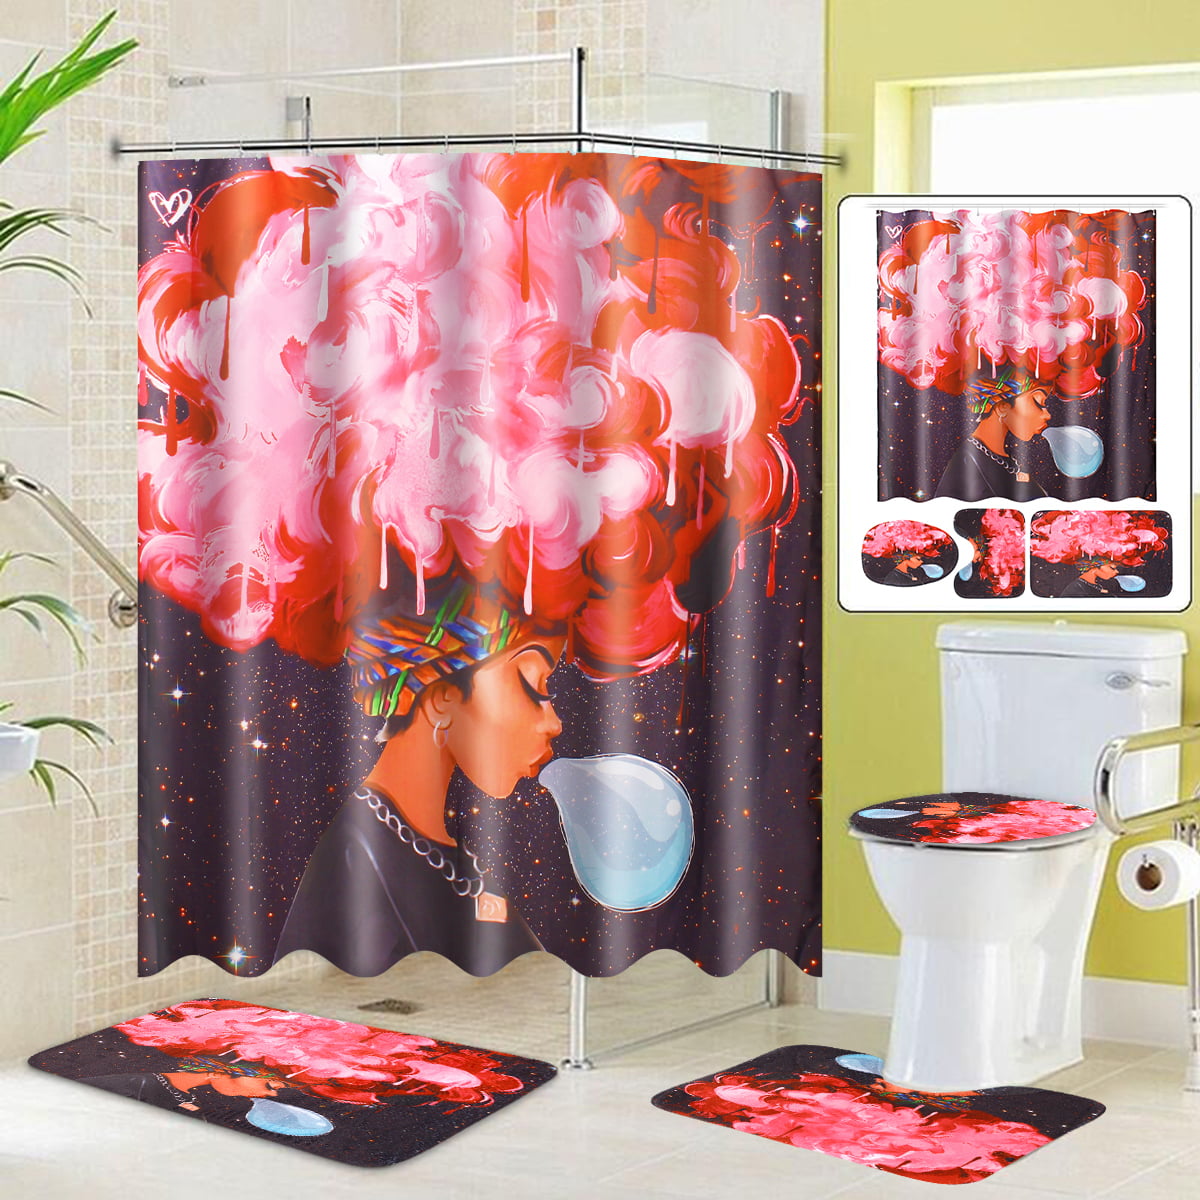 Bathroom Accessory Sets Non-Slip Carpet Lid Toilet Cover Bath Mat Shower Curtain 